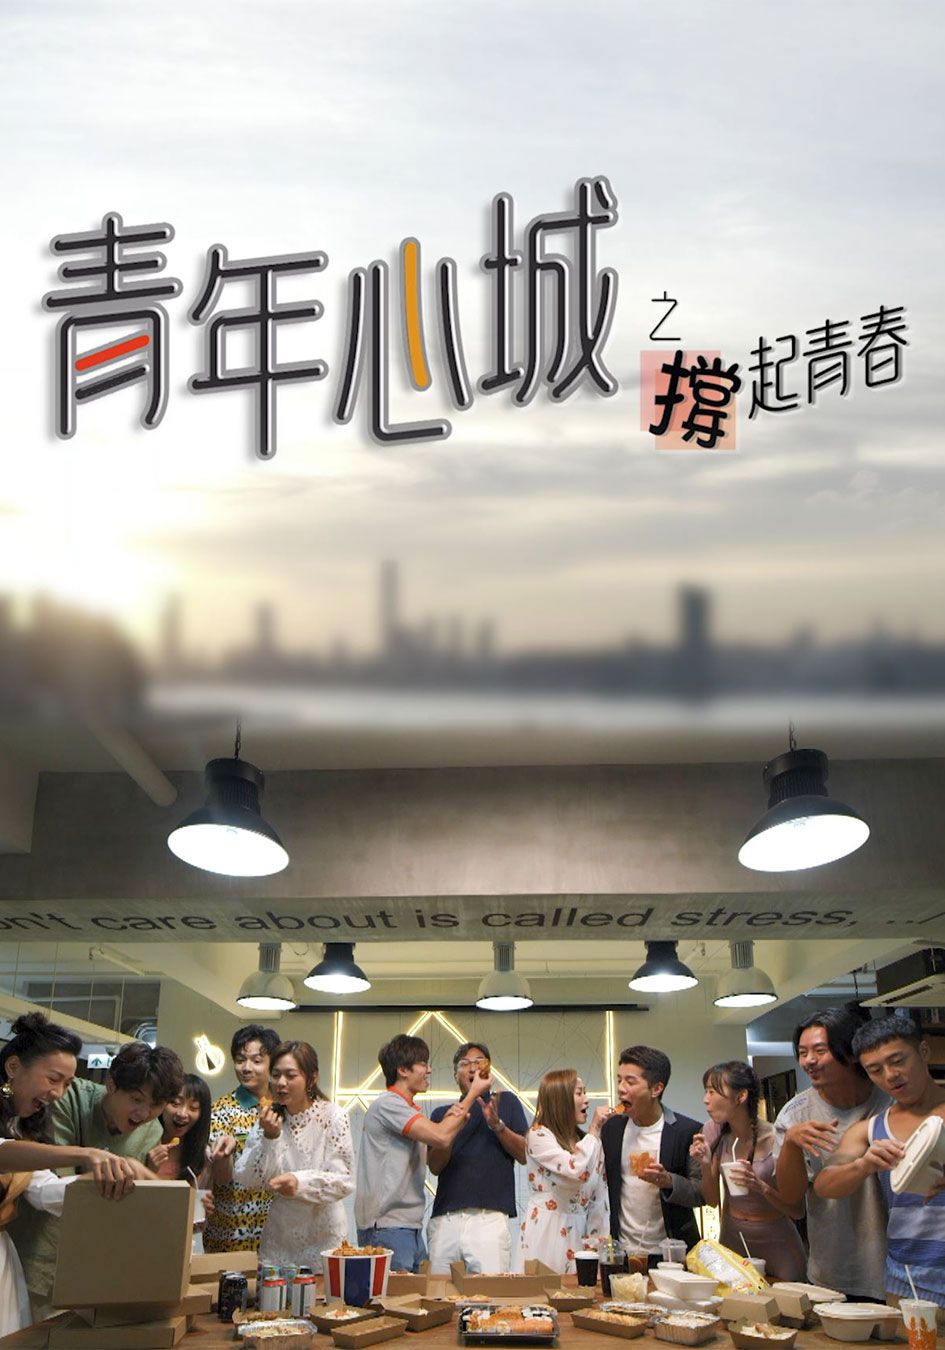 青年心城之撐起青春-Heart City Hong Kong, Prop Up Youth